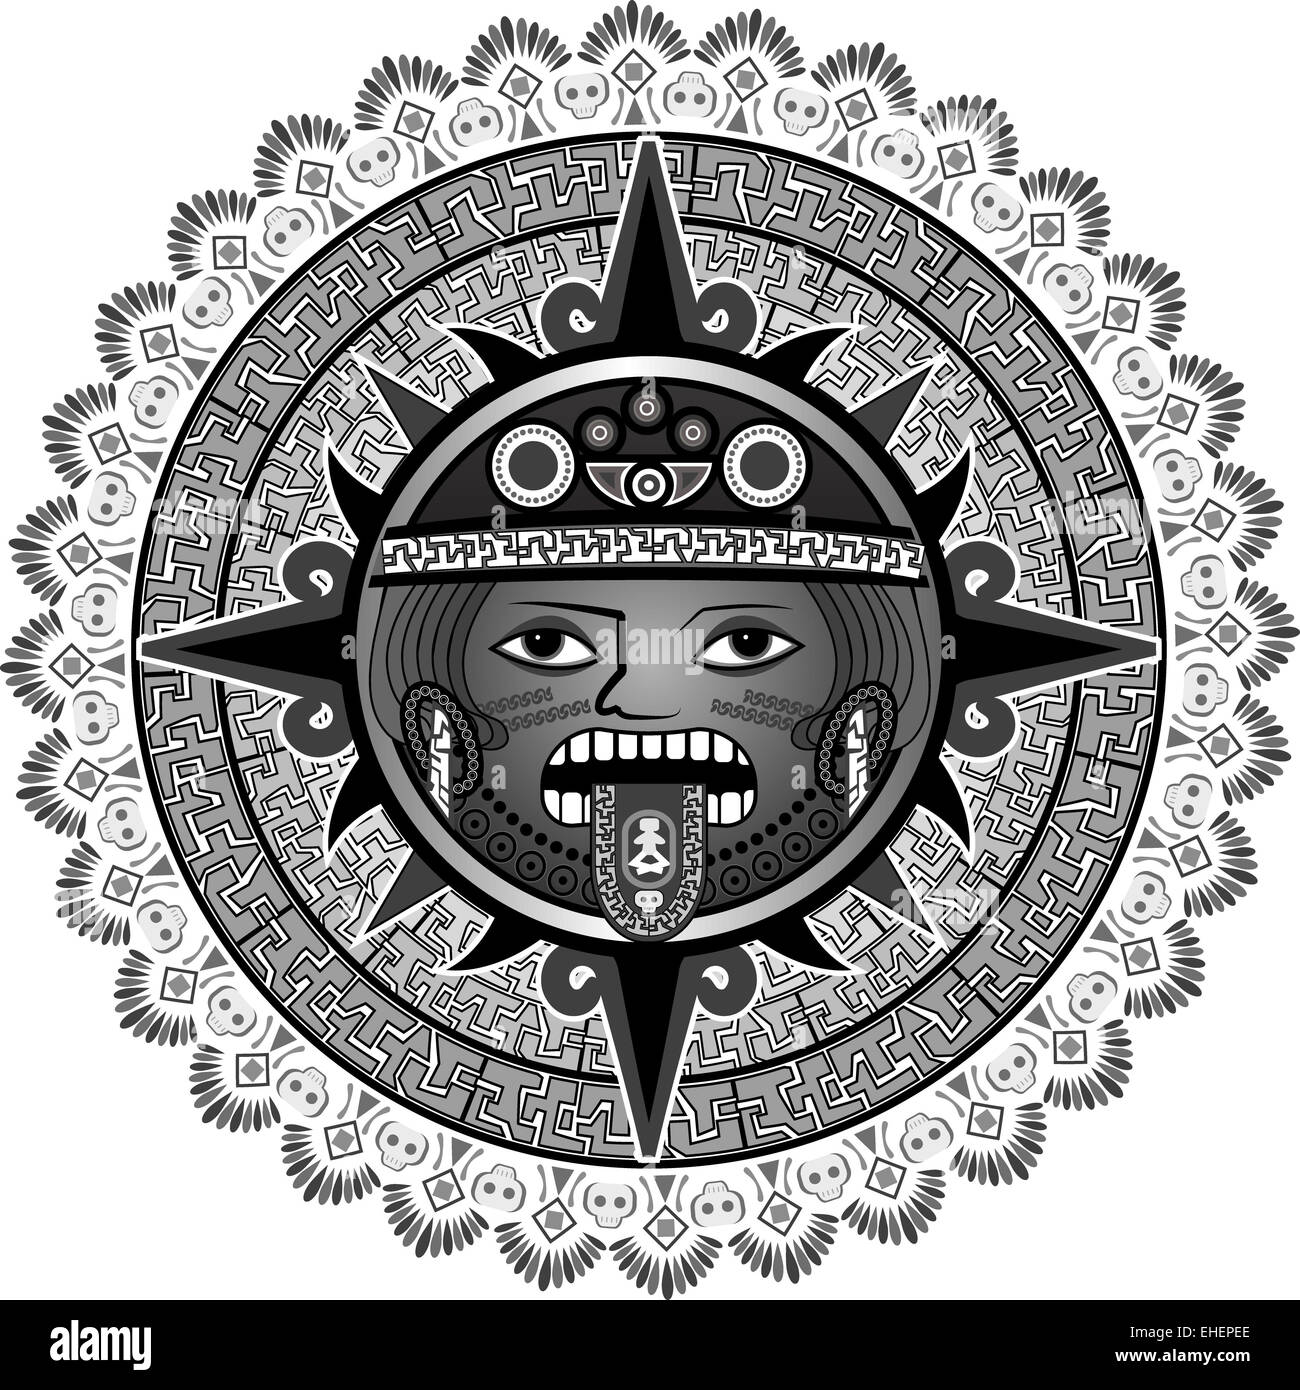 sun of Indians of aztecs Stock Photo